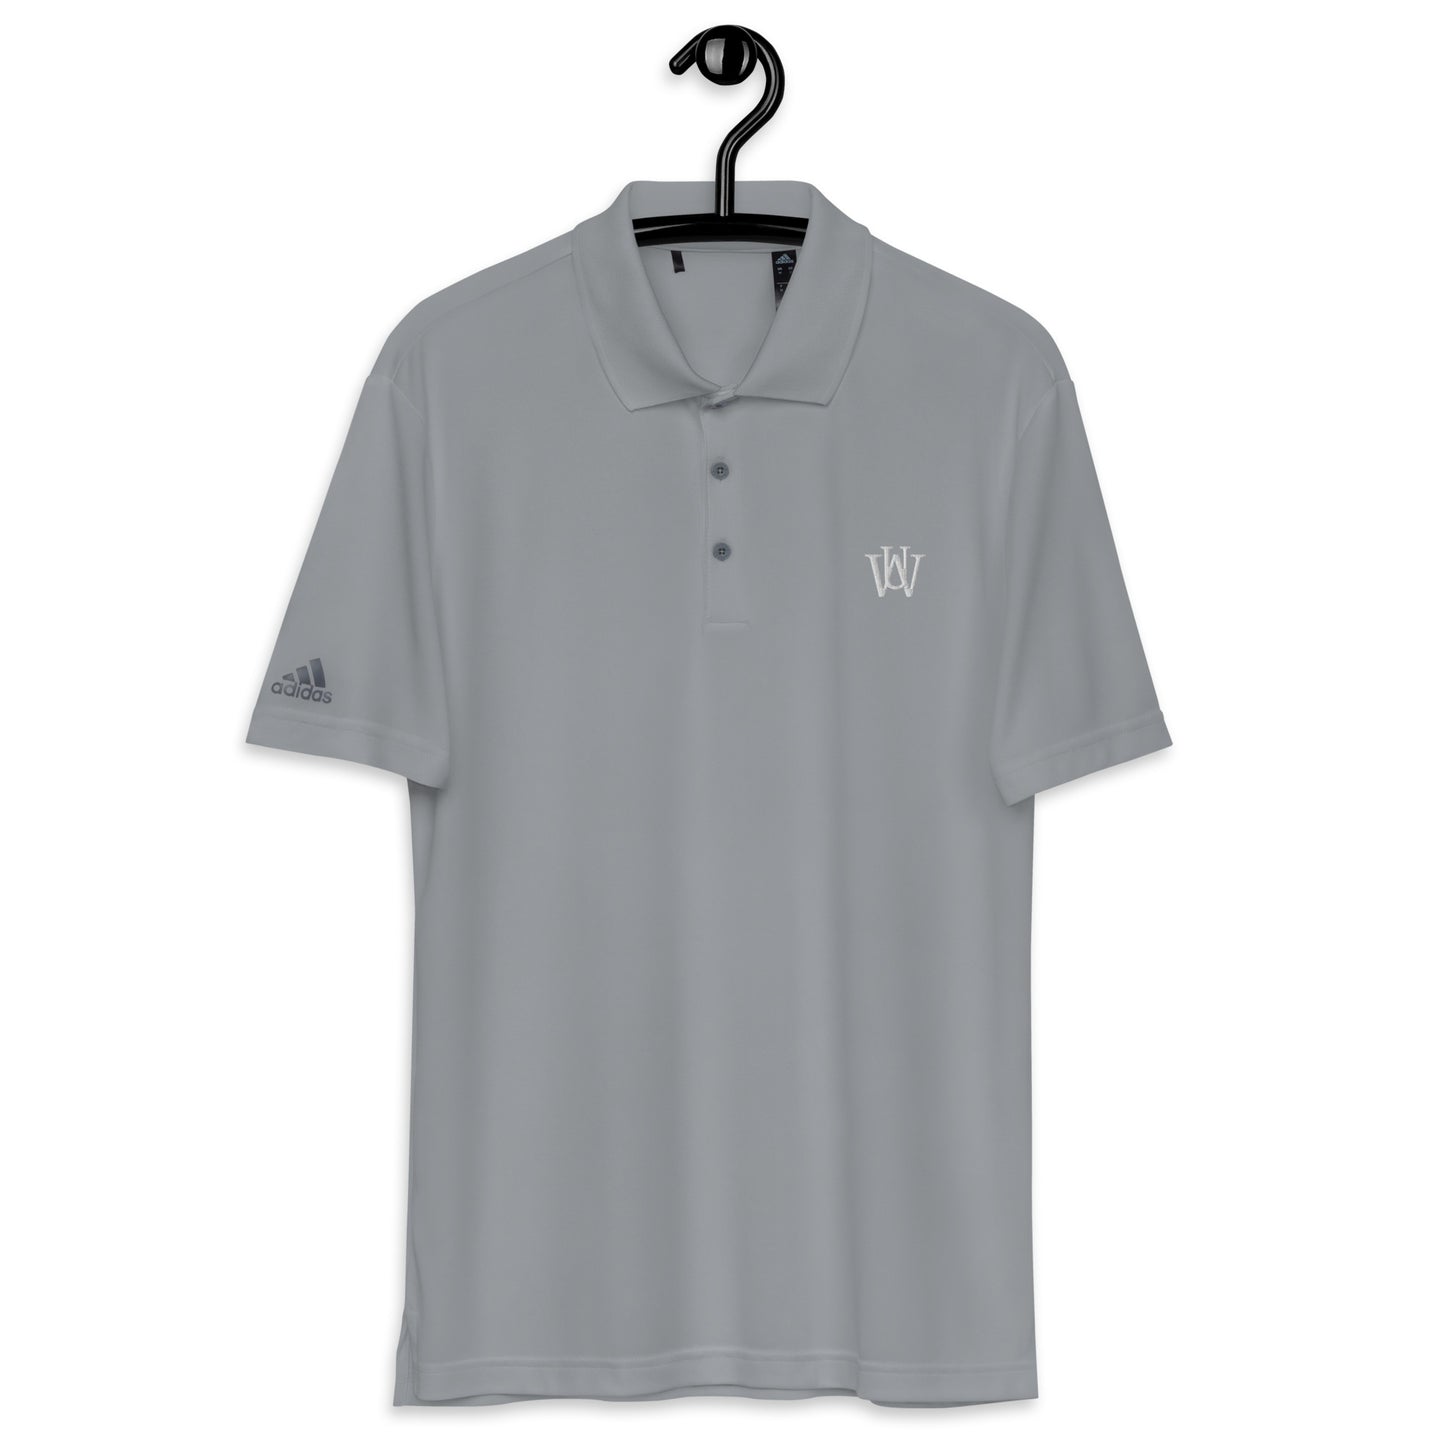 WAKE UP x Adidas Performance Golf Shirt